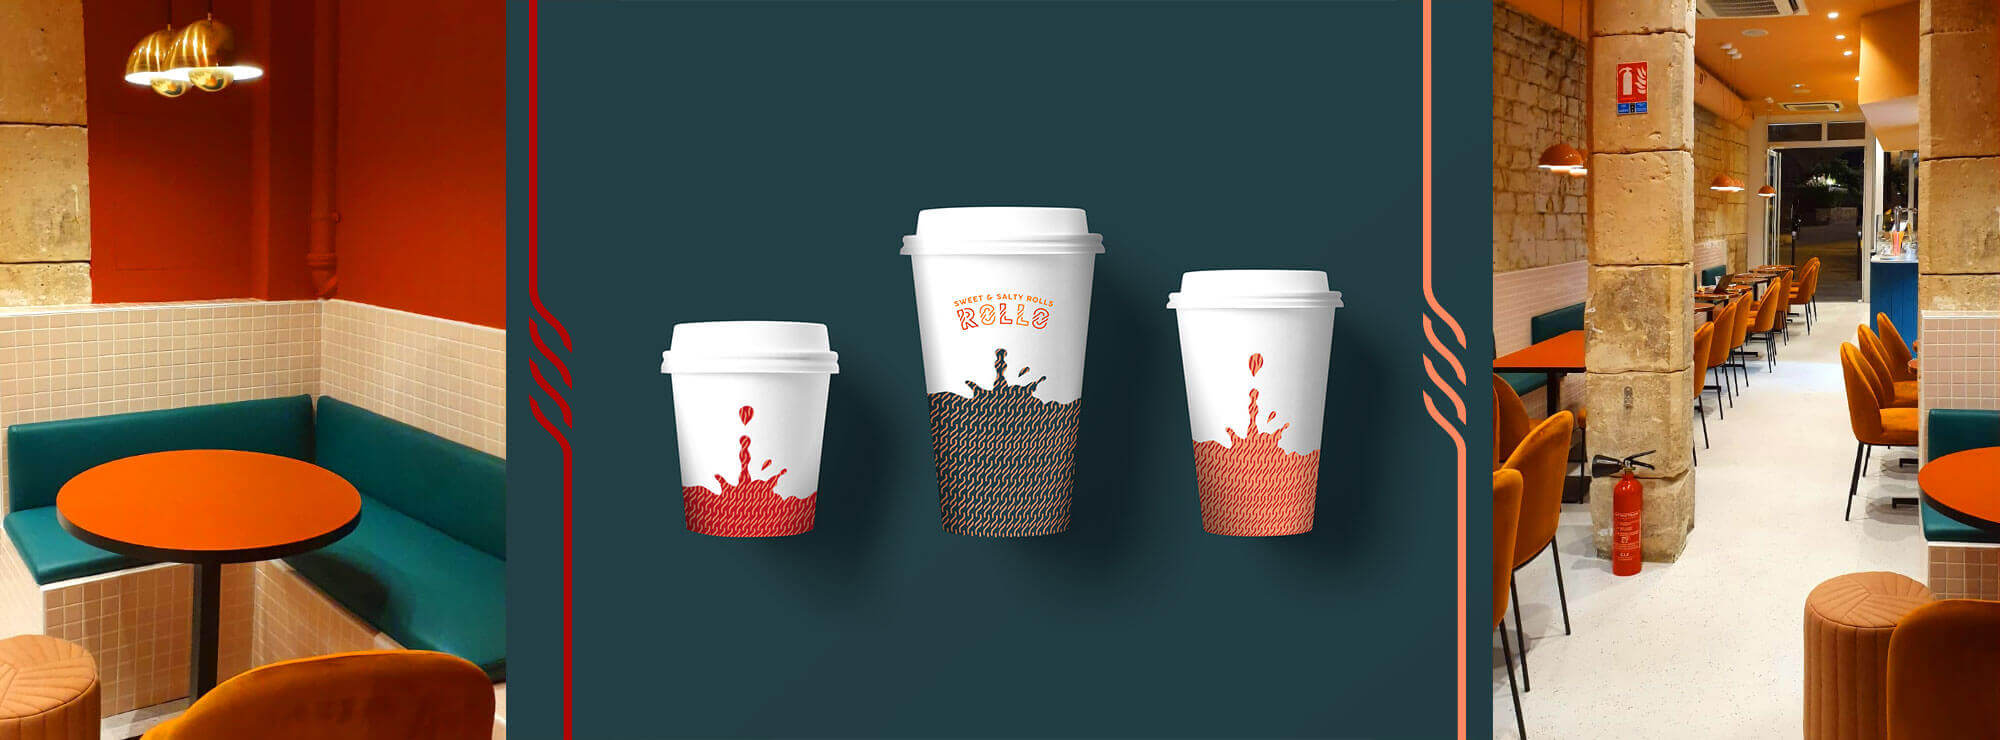 04 rollo cup coffee design interieur.jpg